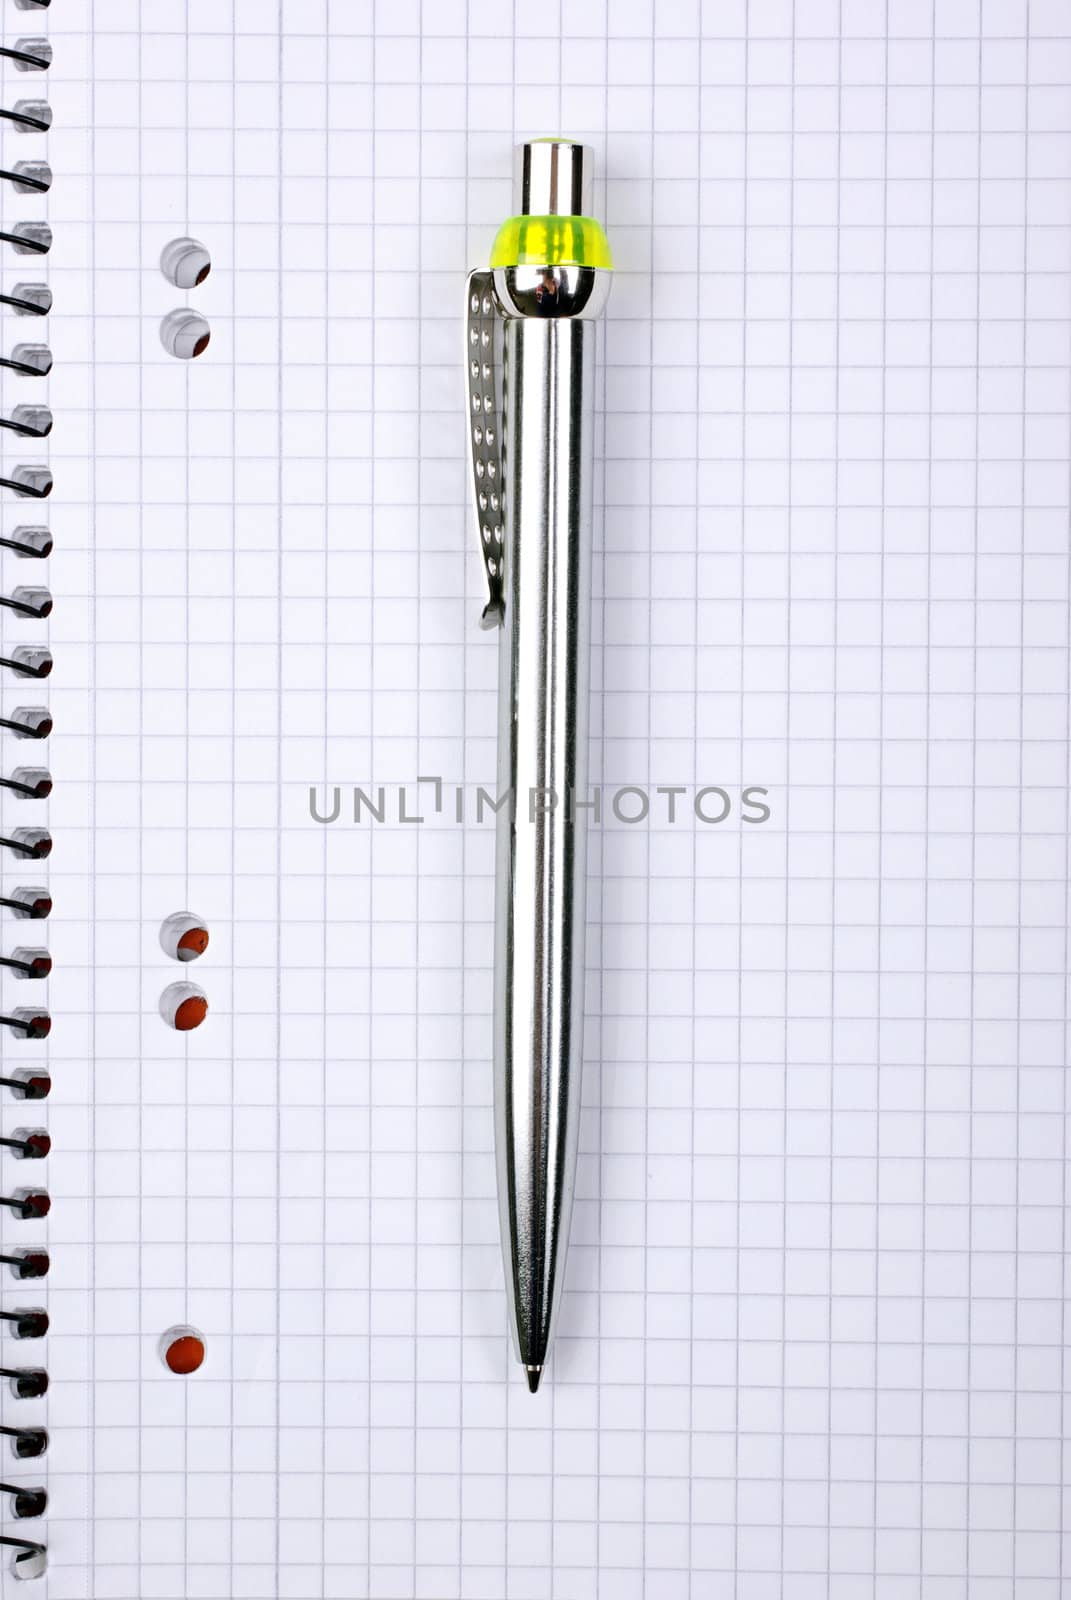 Ballpoint metallic pen laying on spiral notebook.